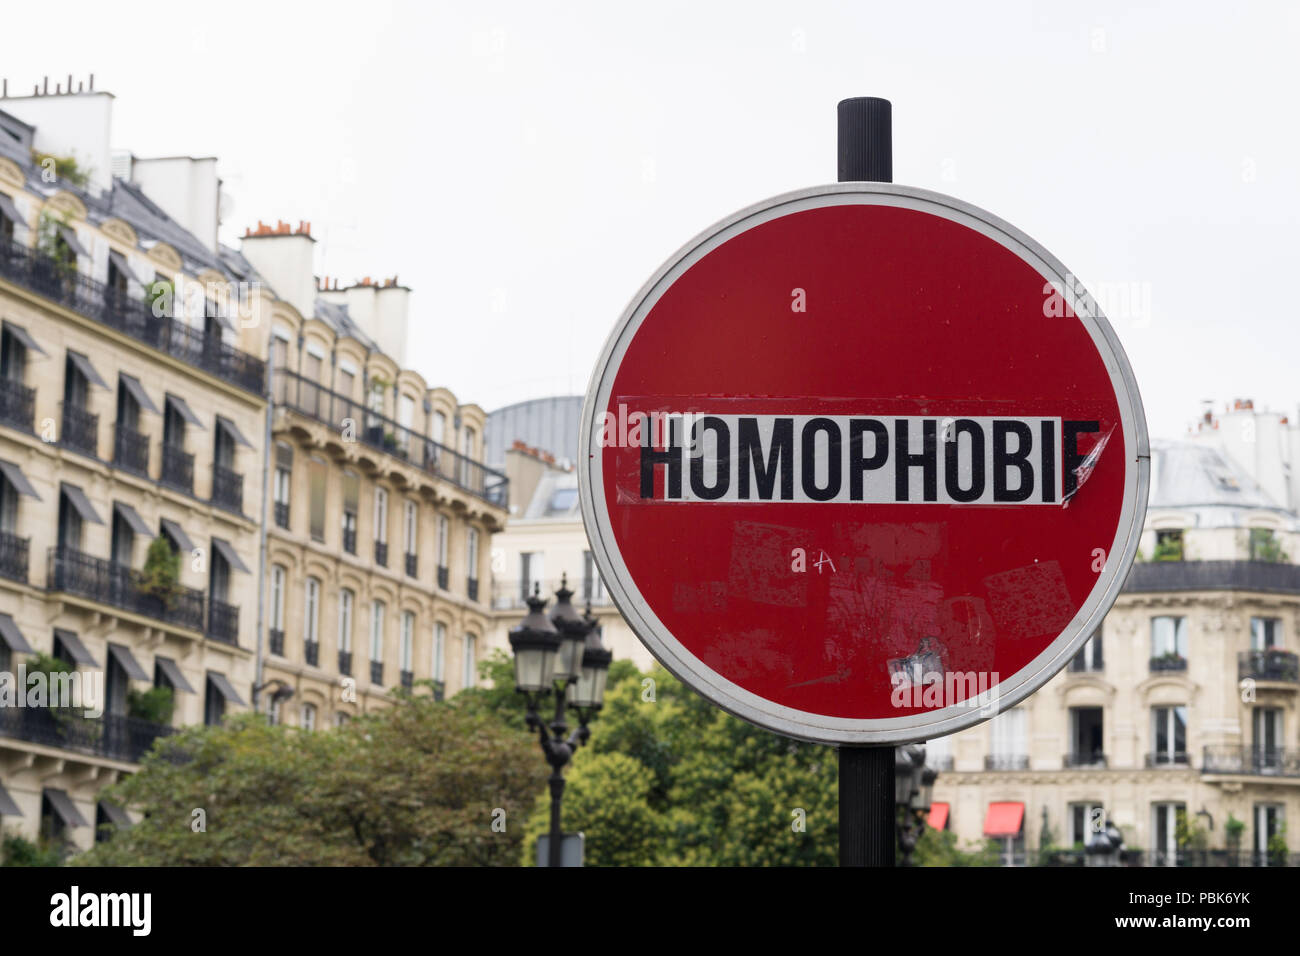 LGBT activism - Anti homophobia street art in Paris, France, Europe. Stock Photo